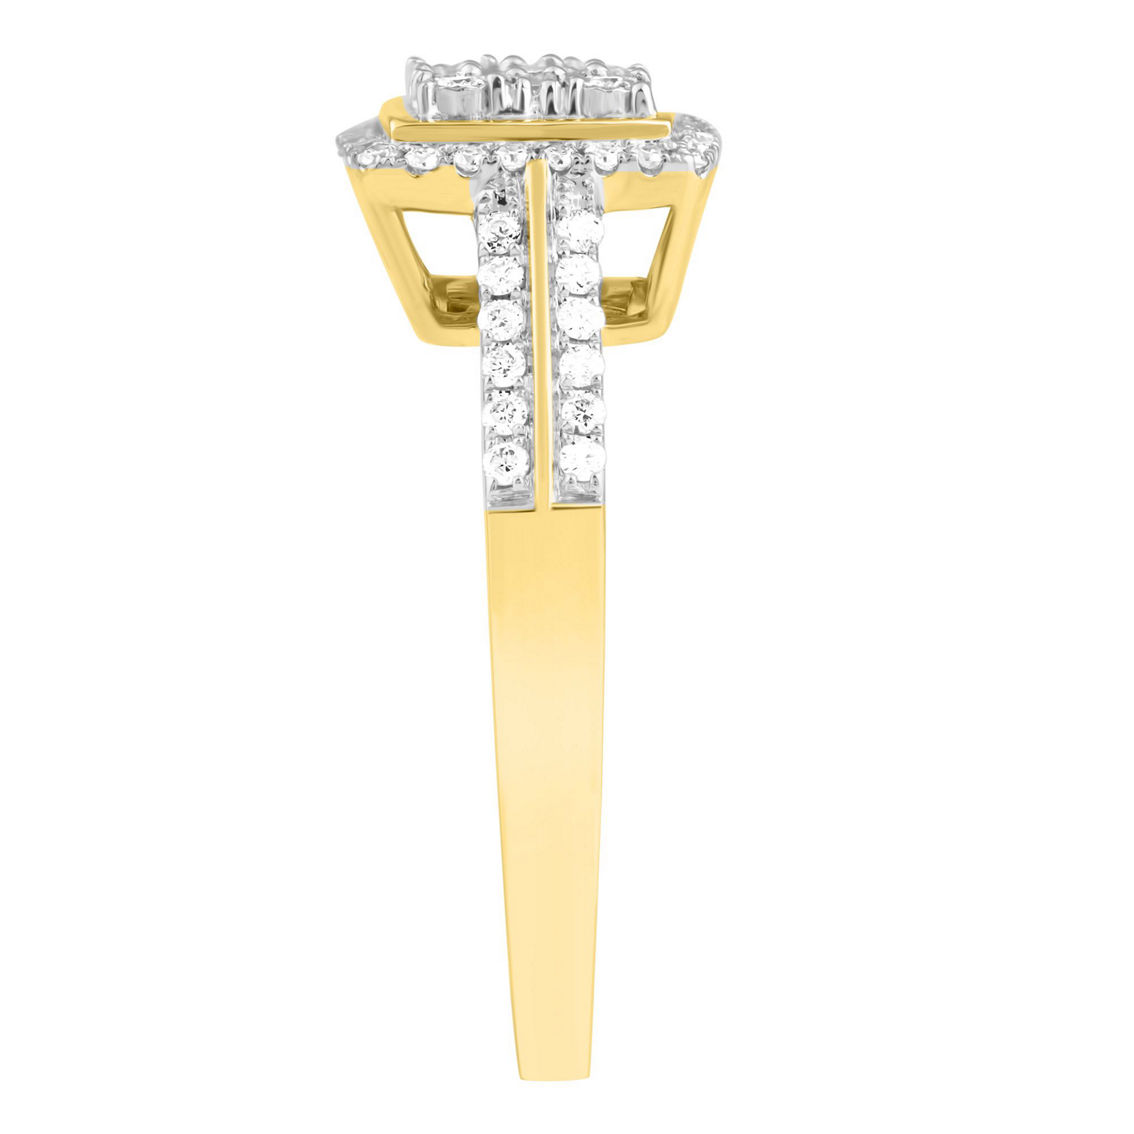 APMG 14K Yellow Gold 1/4 CTW Diamond Cushion Engagement Ring - Image 3 of 4